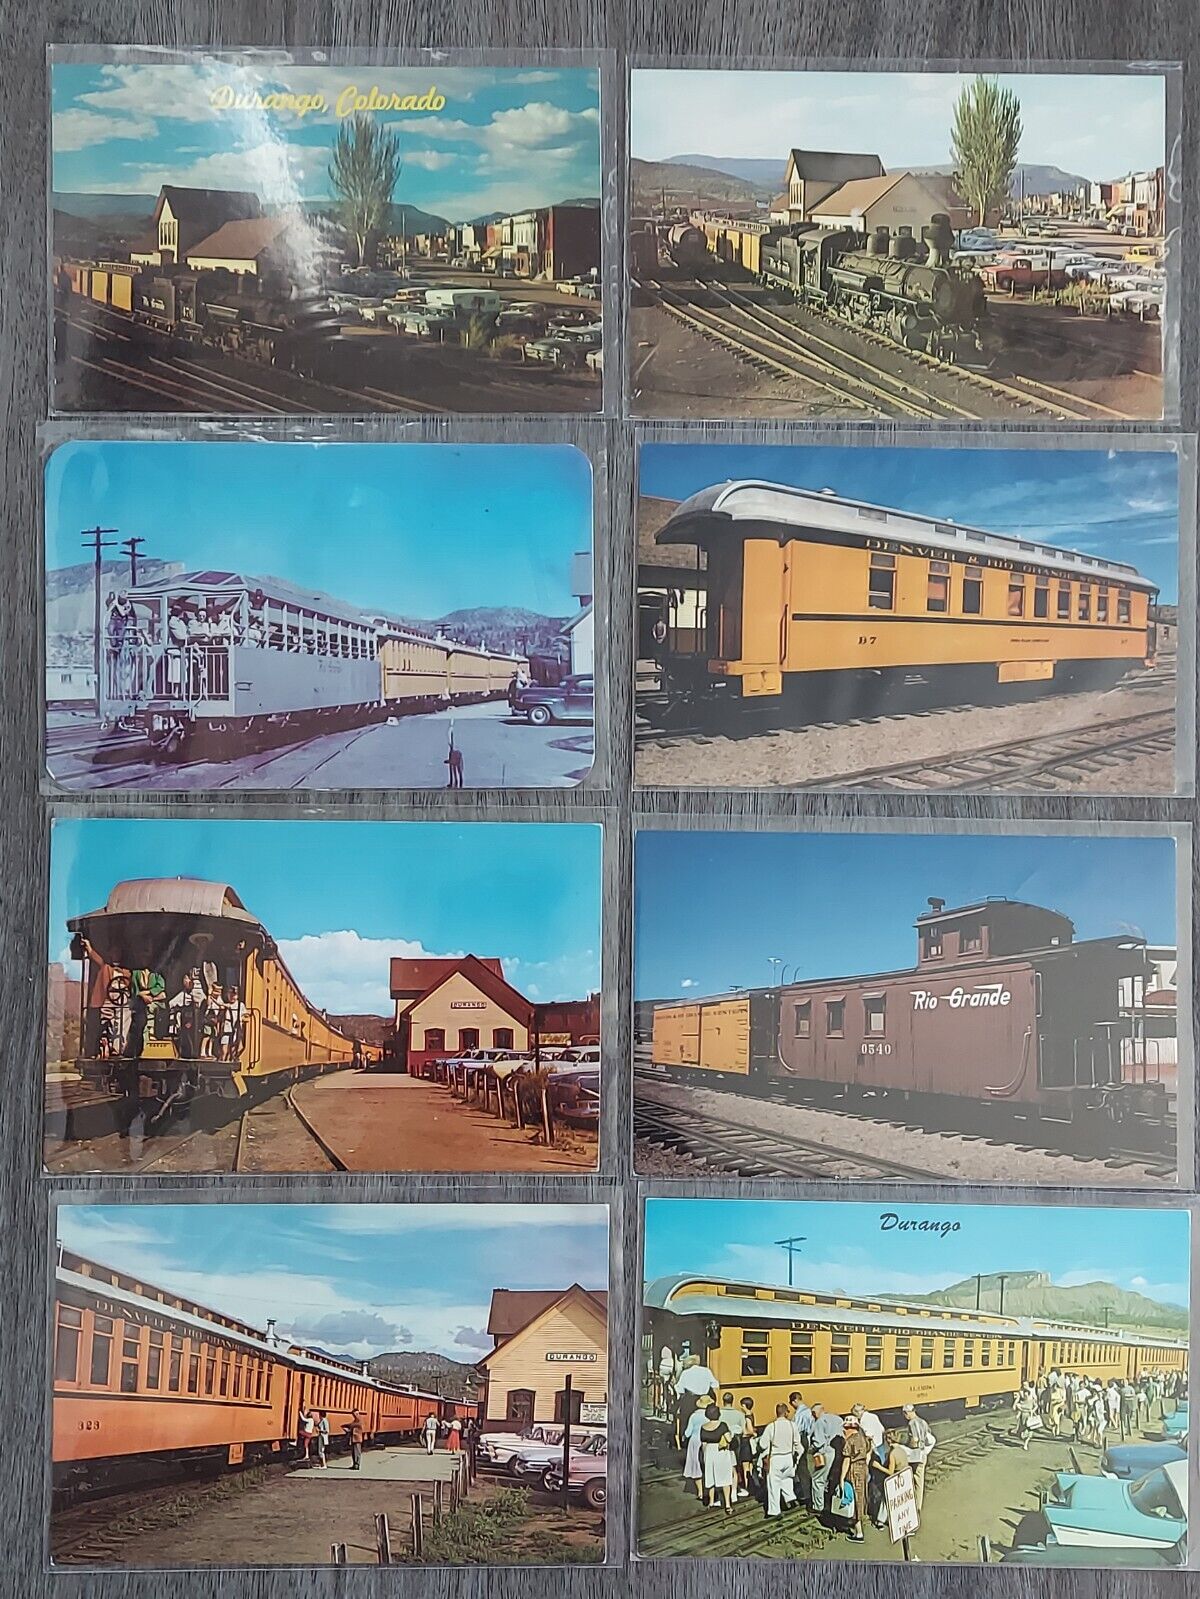 88 Durango and Silverton,Rio Grande, Narrow Gauge Railroad Postcards,Train